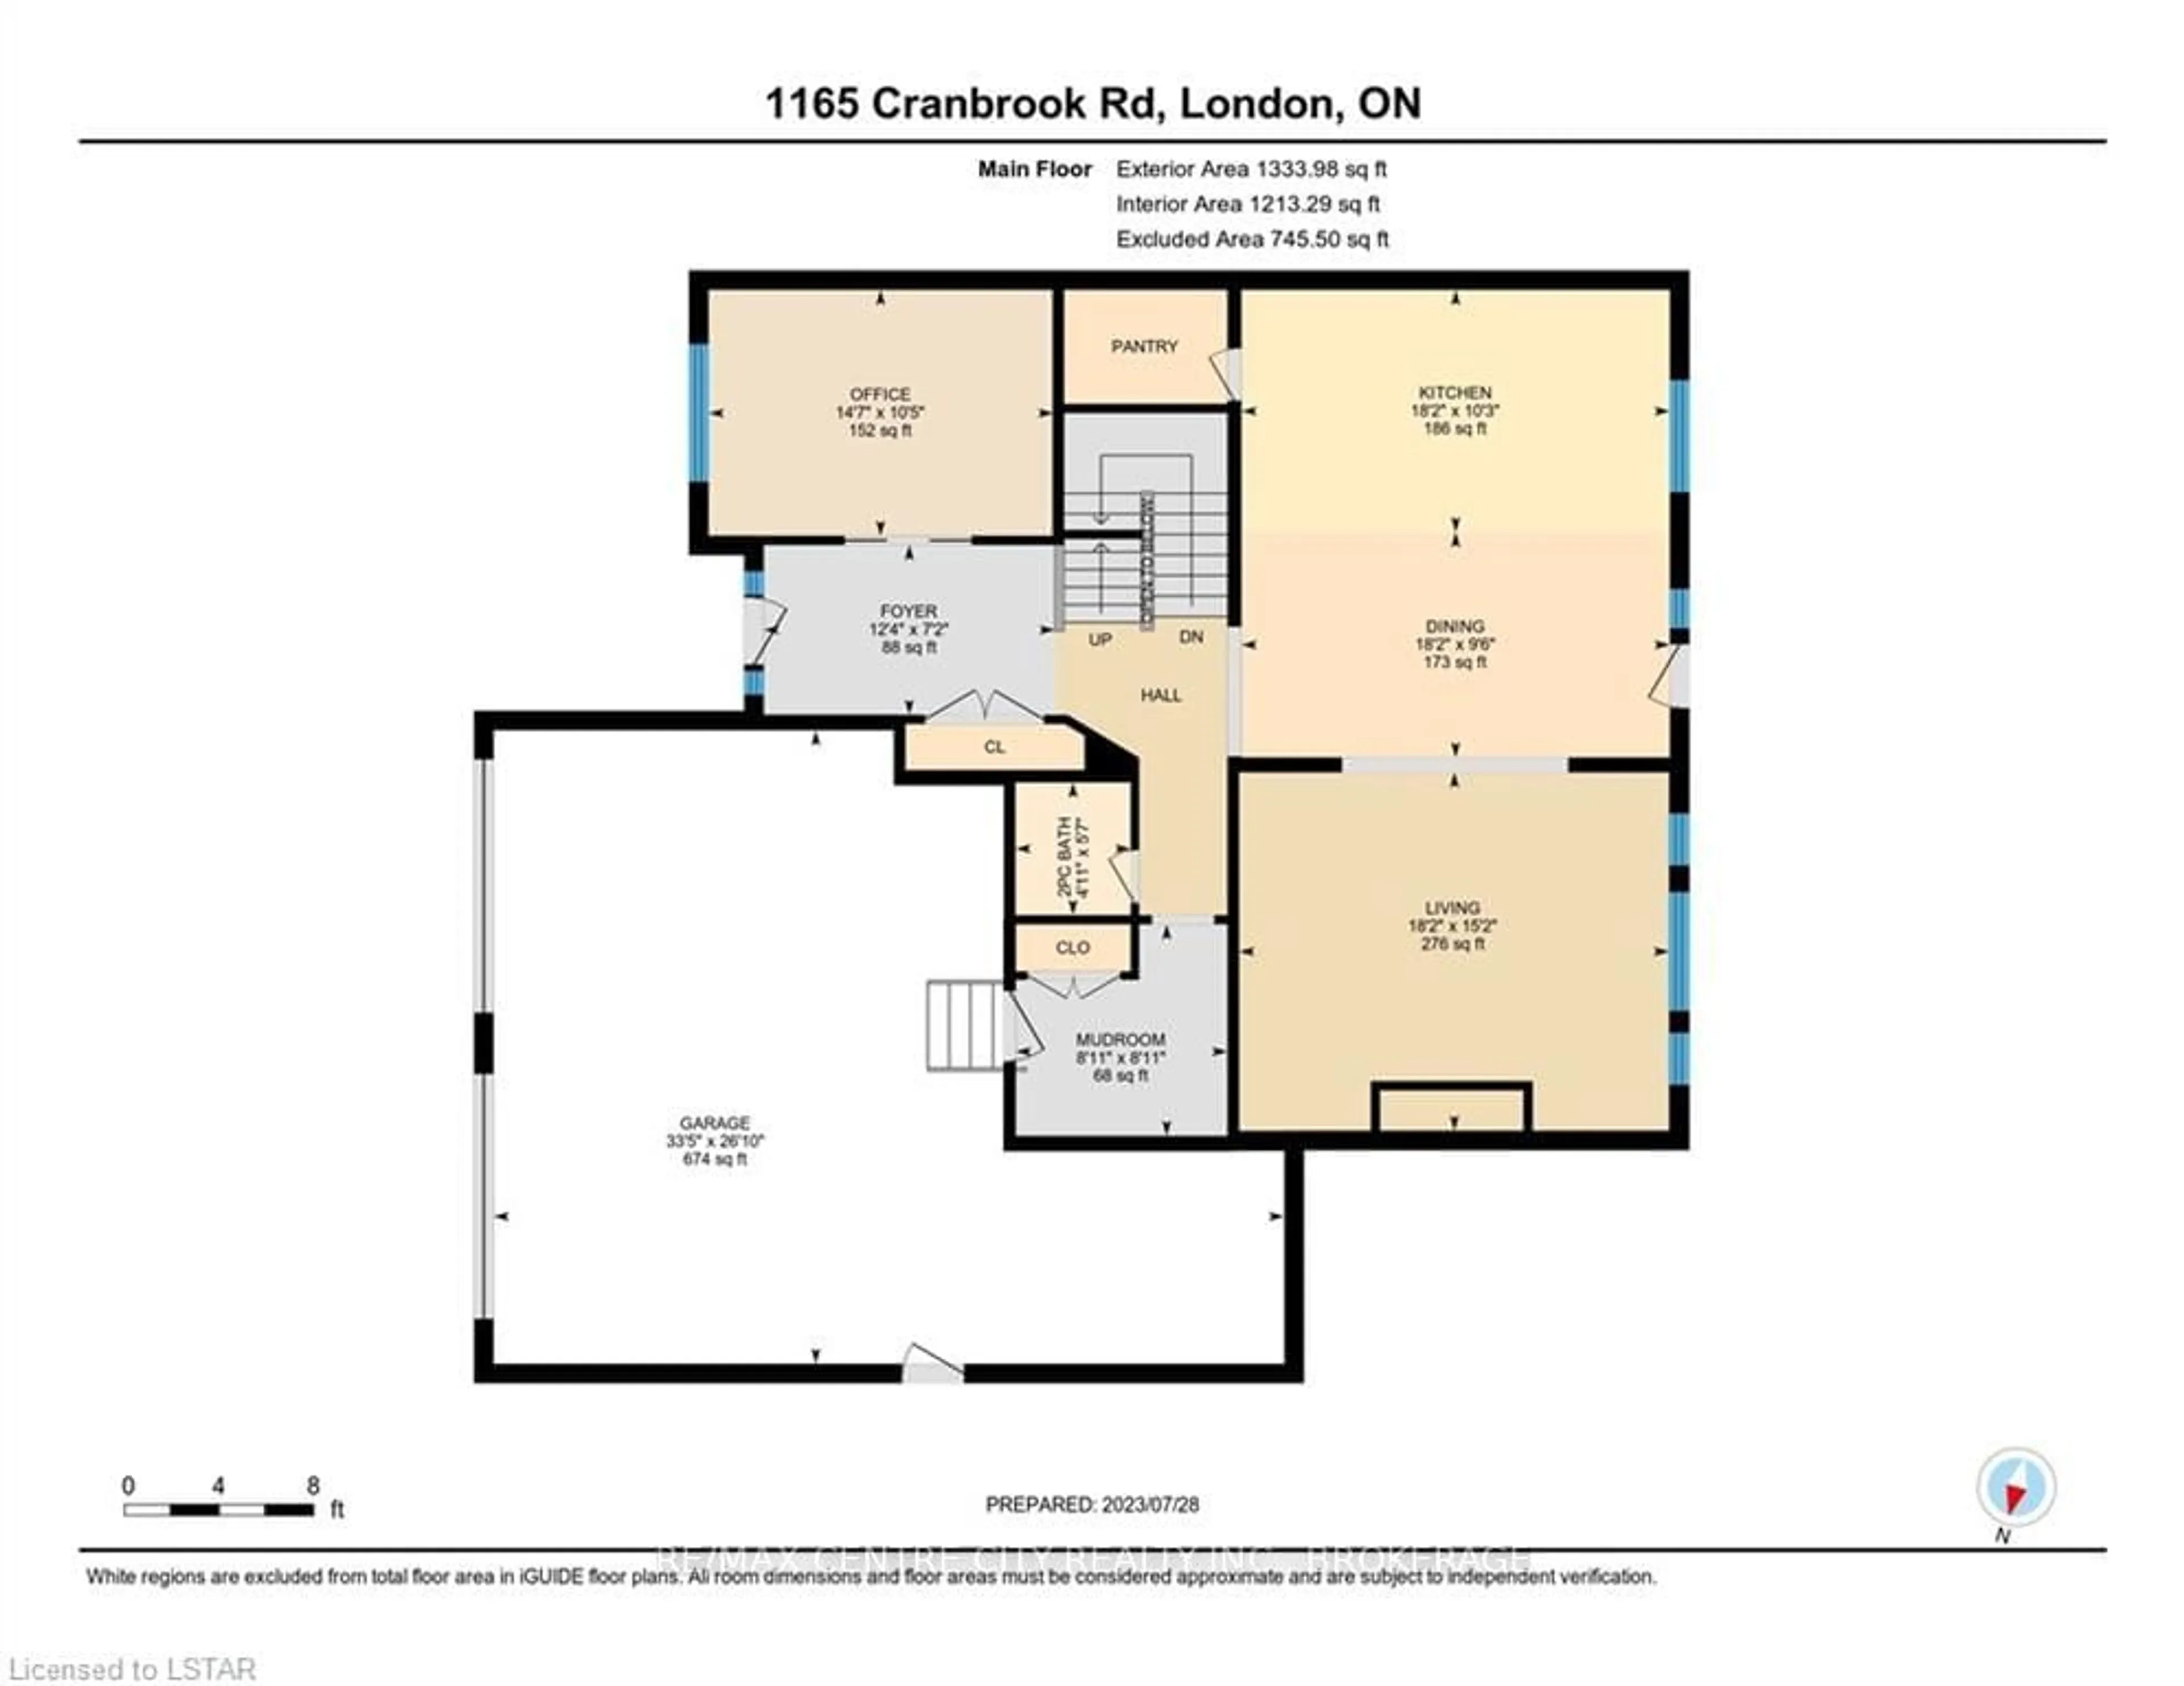 Floor plan for 1165 Cranbrook Rd, London Ontario N6K 0G7